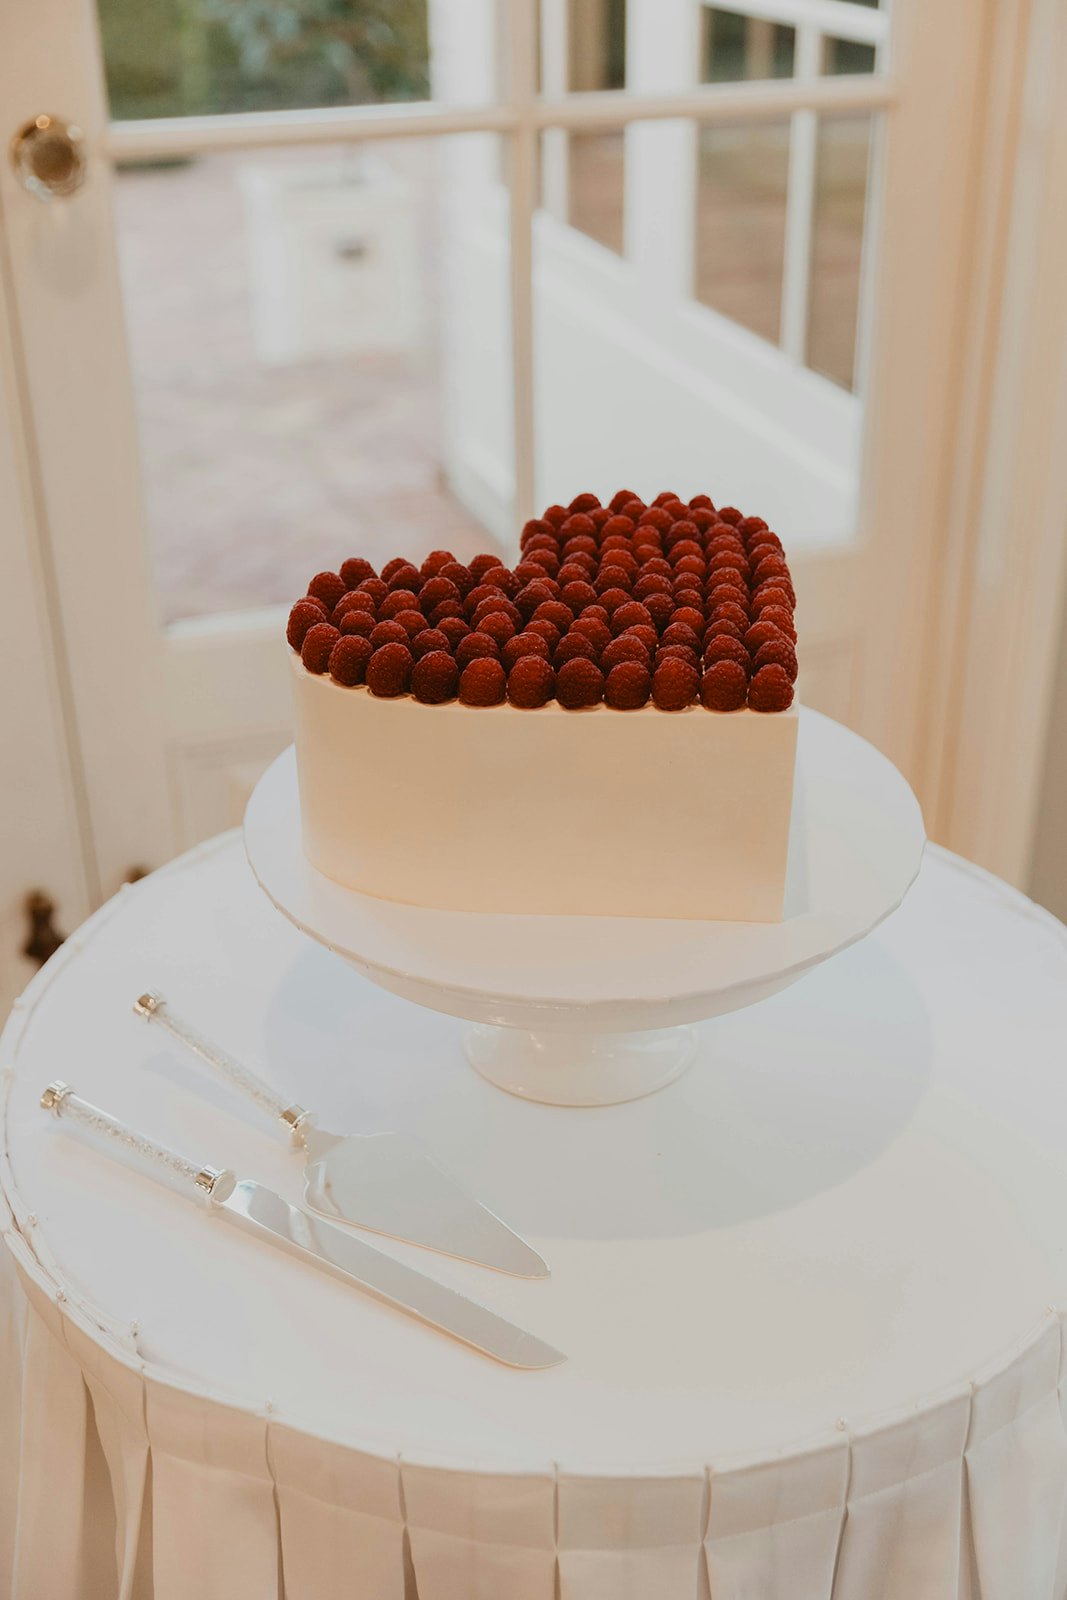 Wedding cake with raspberries on top